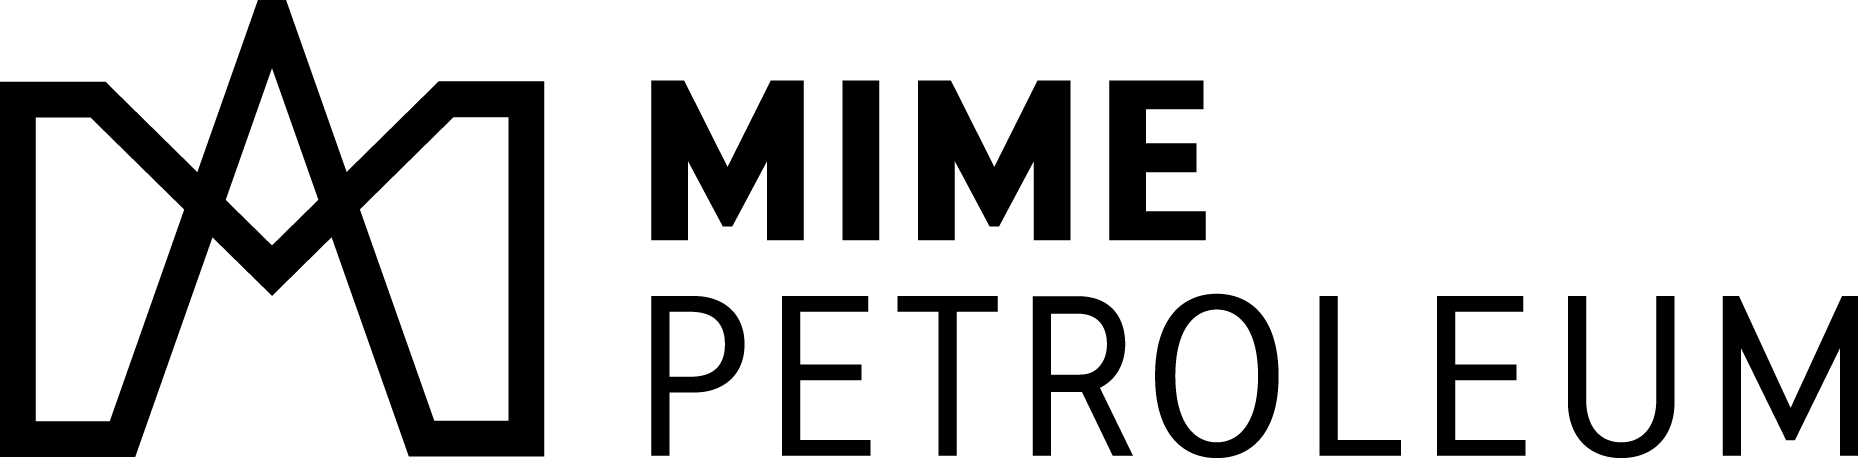 MimePetroleum Logo Black